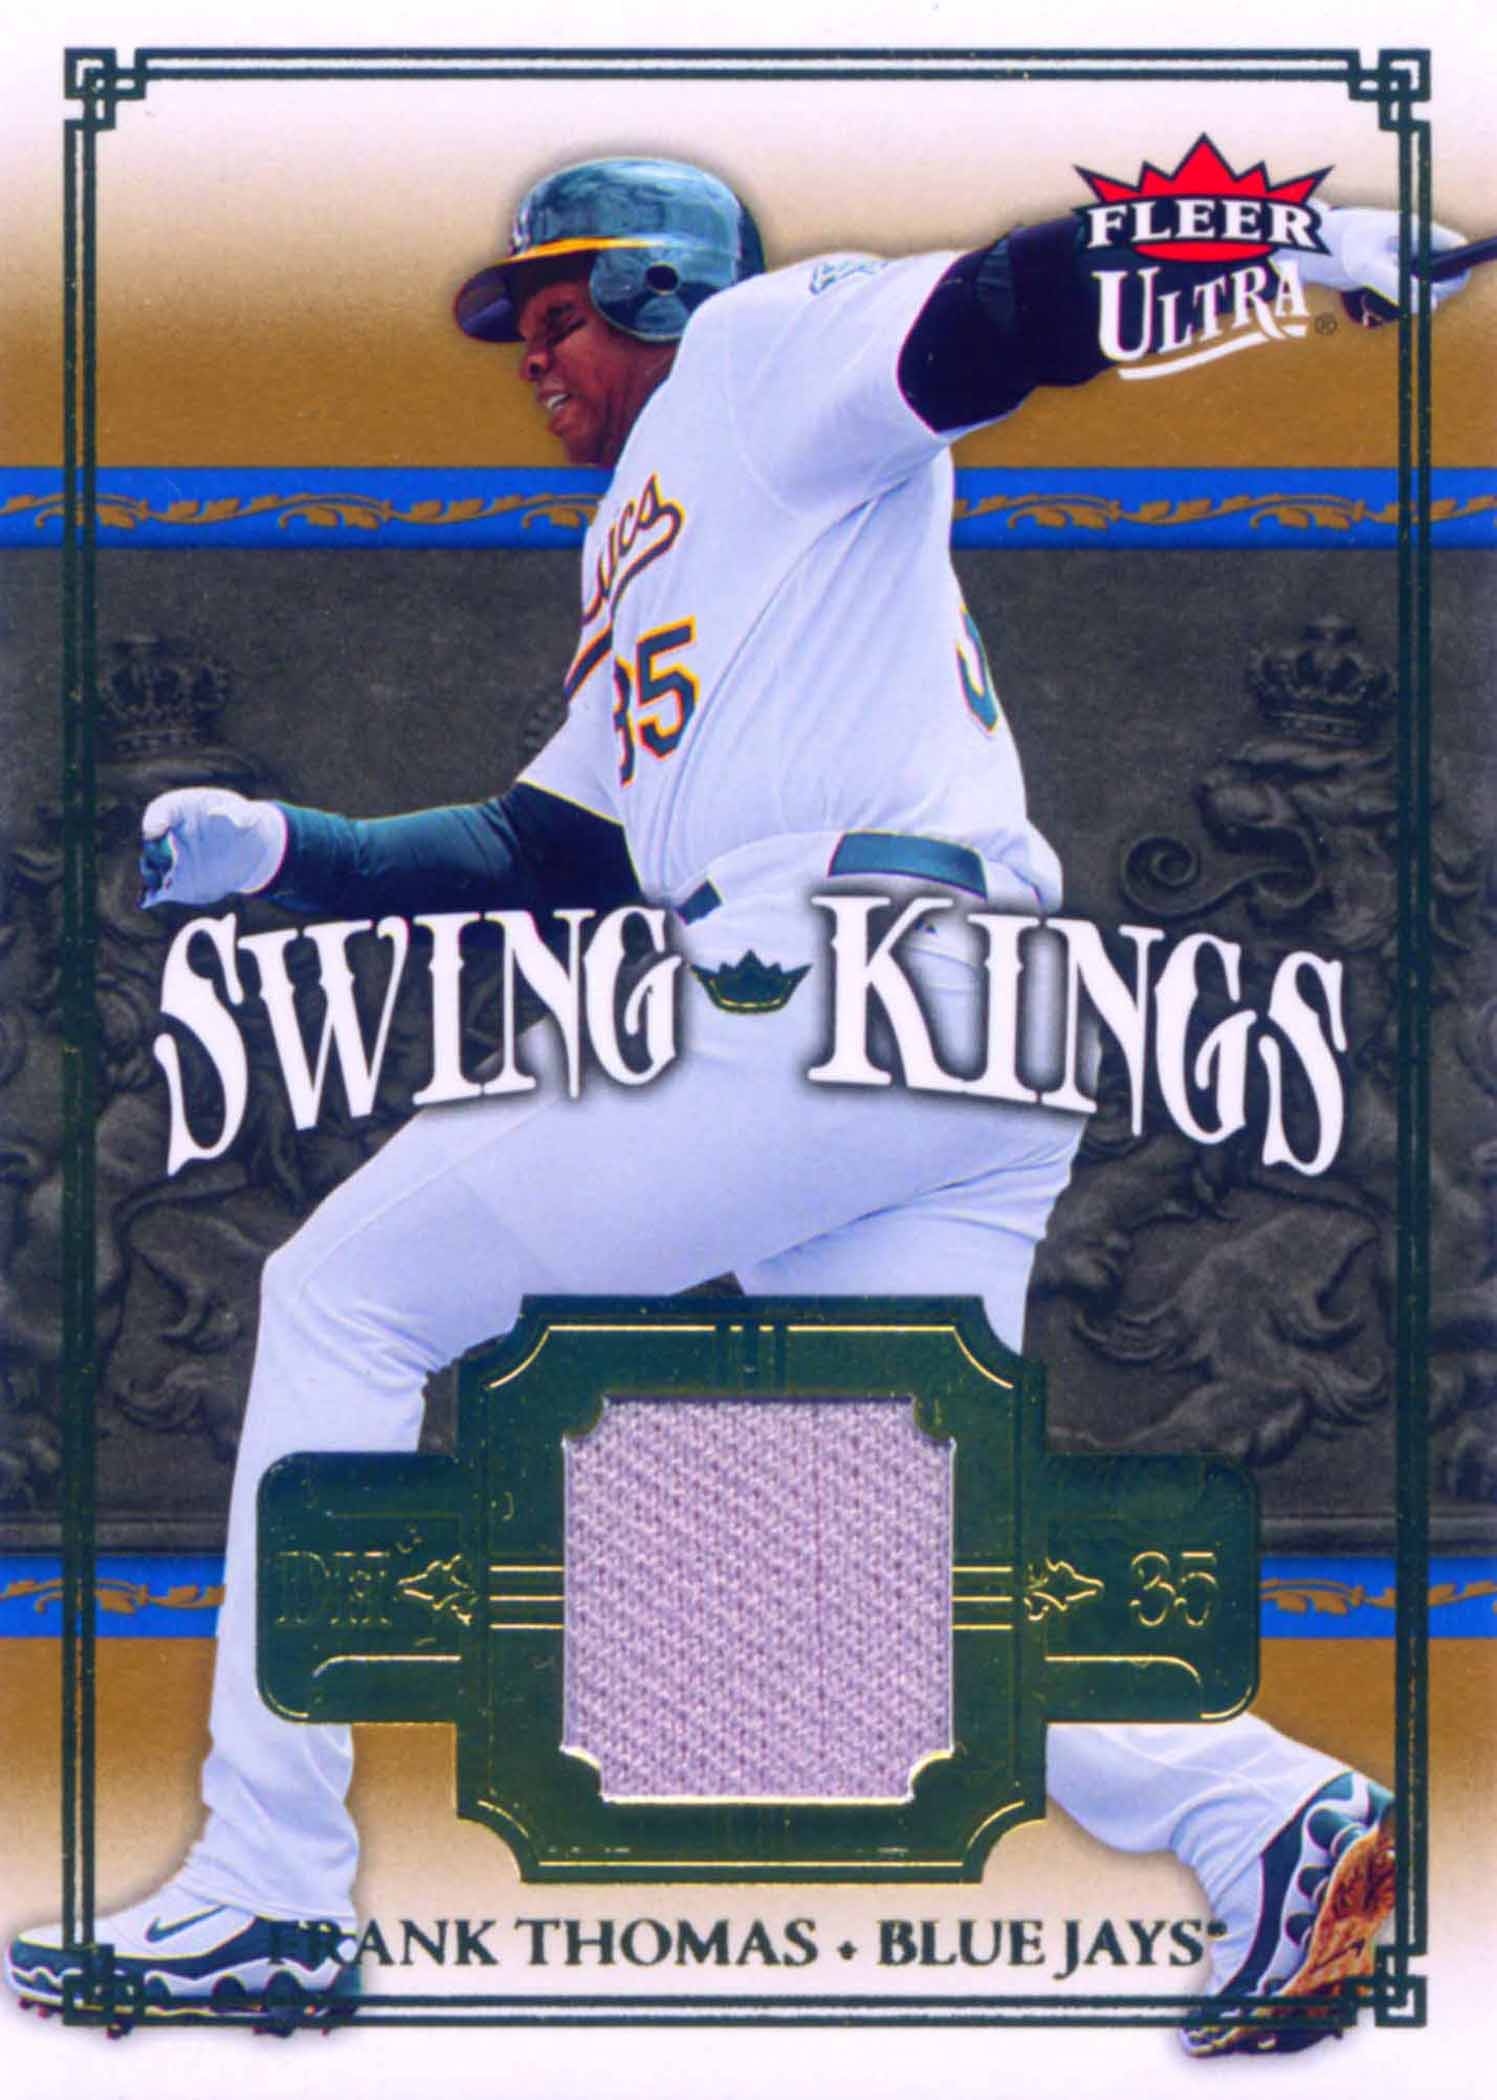 2007 Ultra Swing Kings Materials